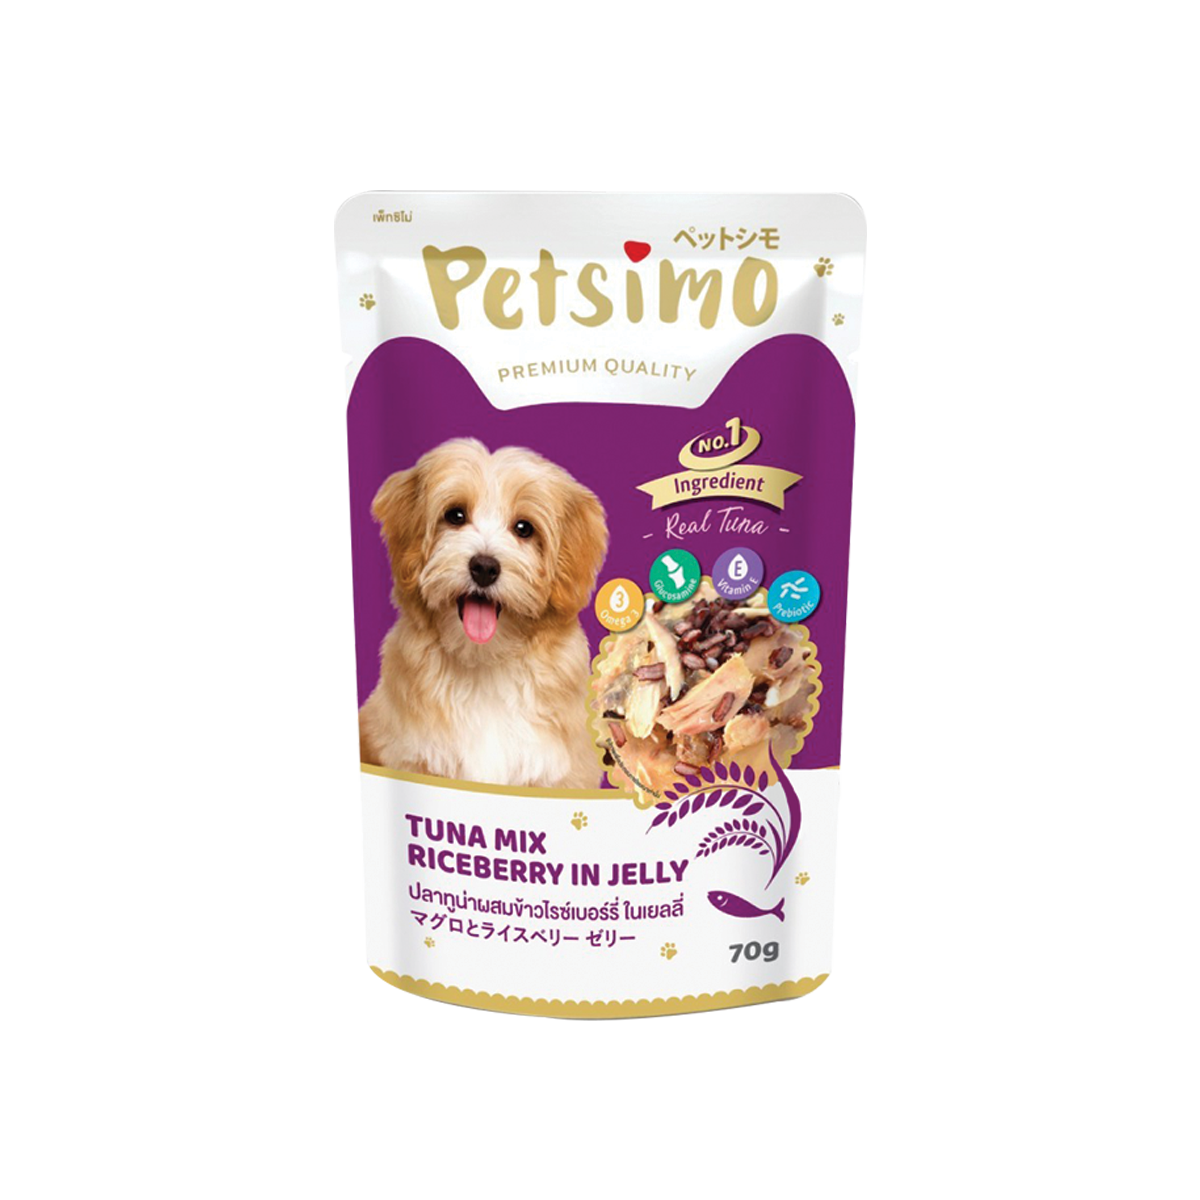 Petsimo Pouch Dog Food Tuna Mix Riceberry In Jelly Flavor เพ็ทซิโม่ อาหารเปียกสำหรับสุนัข รสทูน่าผสมข้าวไรซ์เบอรี่ ในเจลลี่ ขนาด 70กรัม (12ซอง)